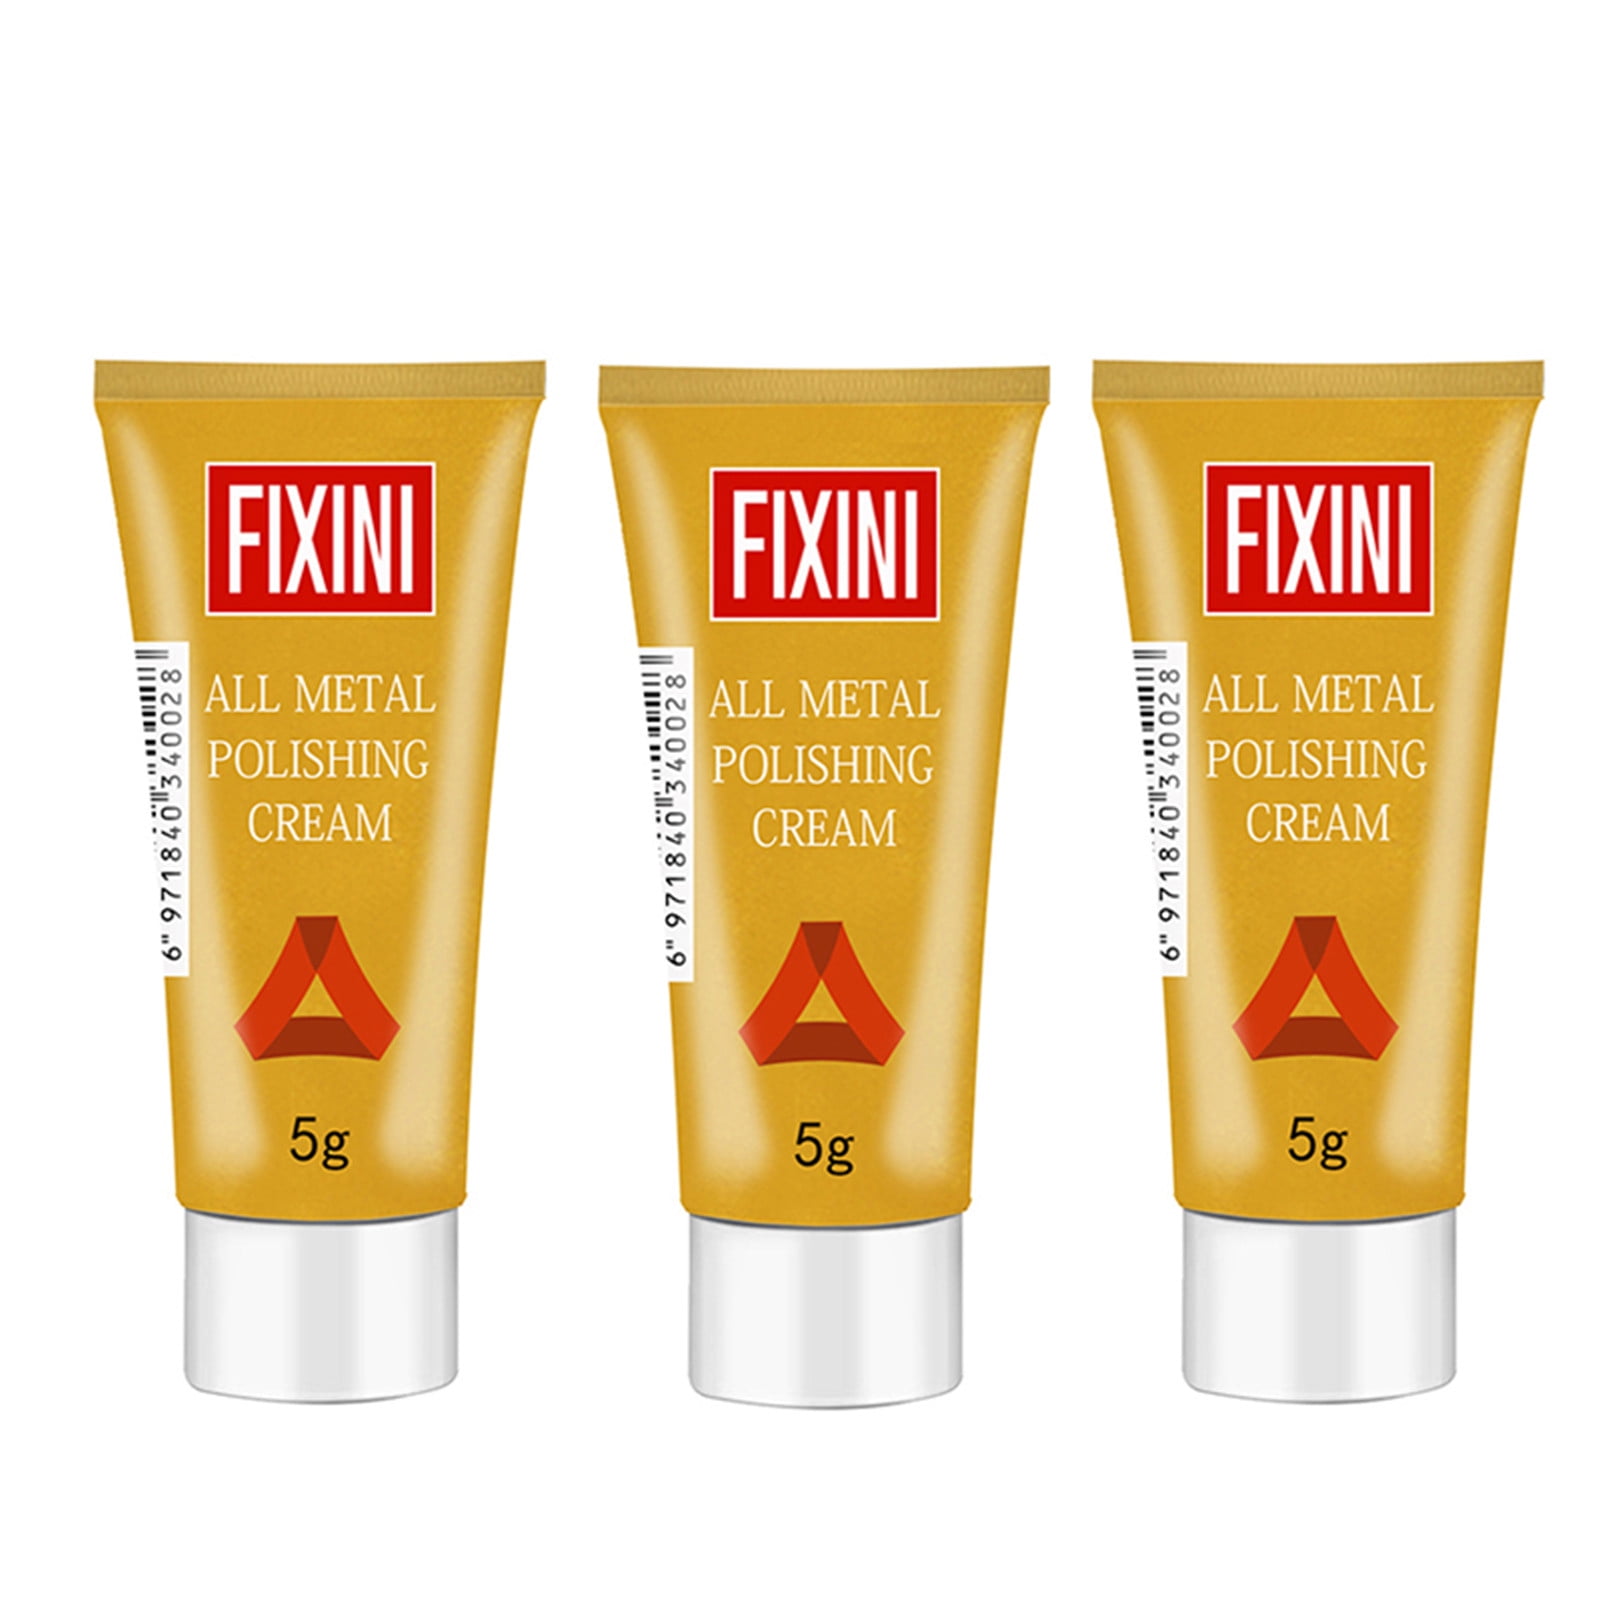 FIXINI All Metal Polish Cream 5-15G fREE SHIPPING V0H9 